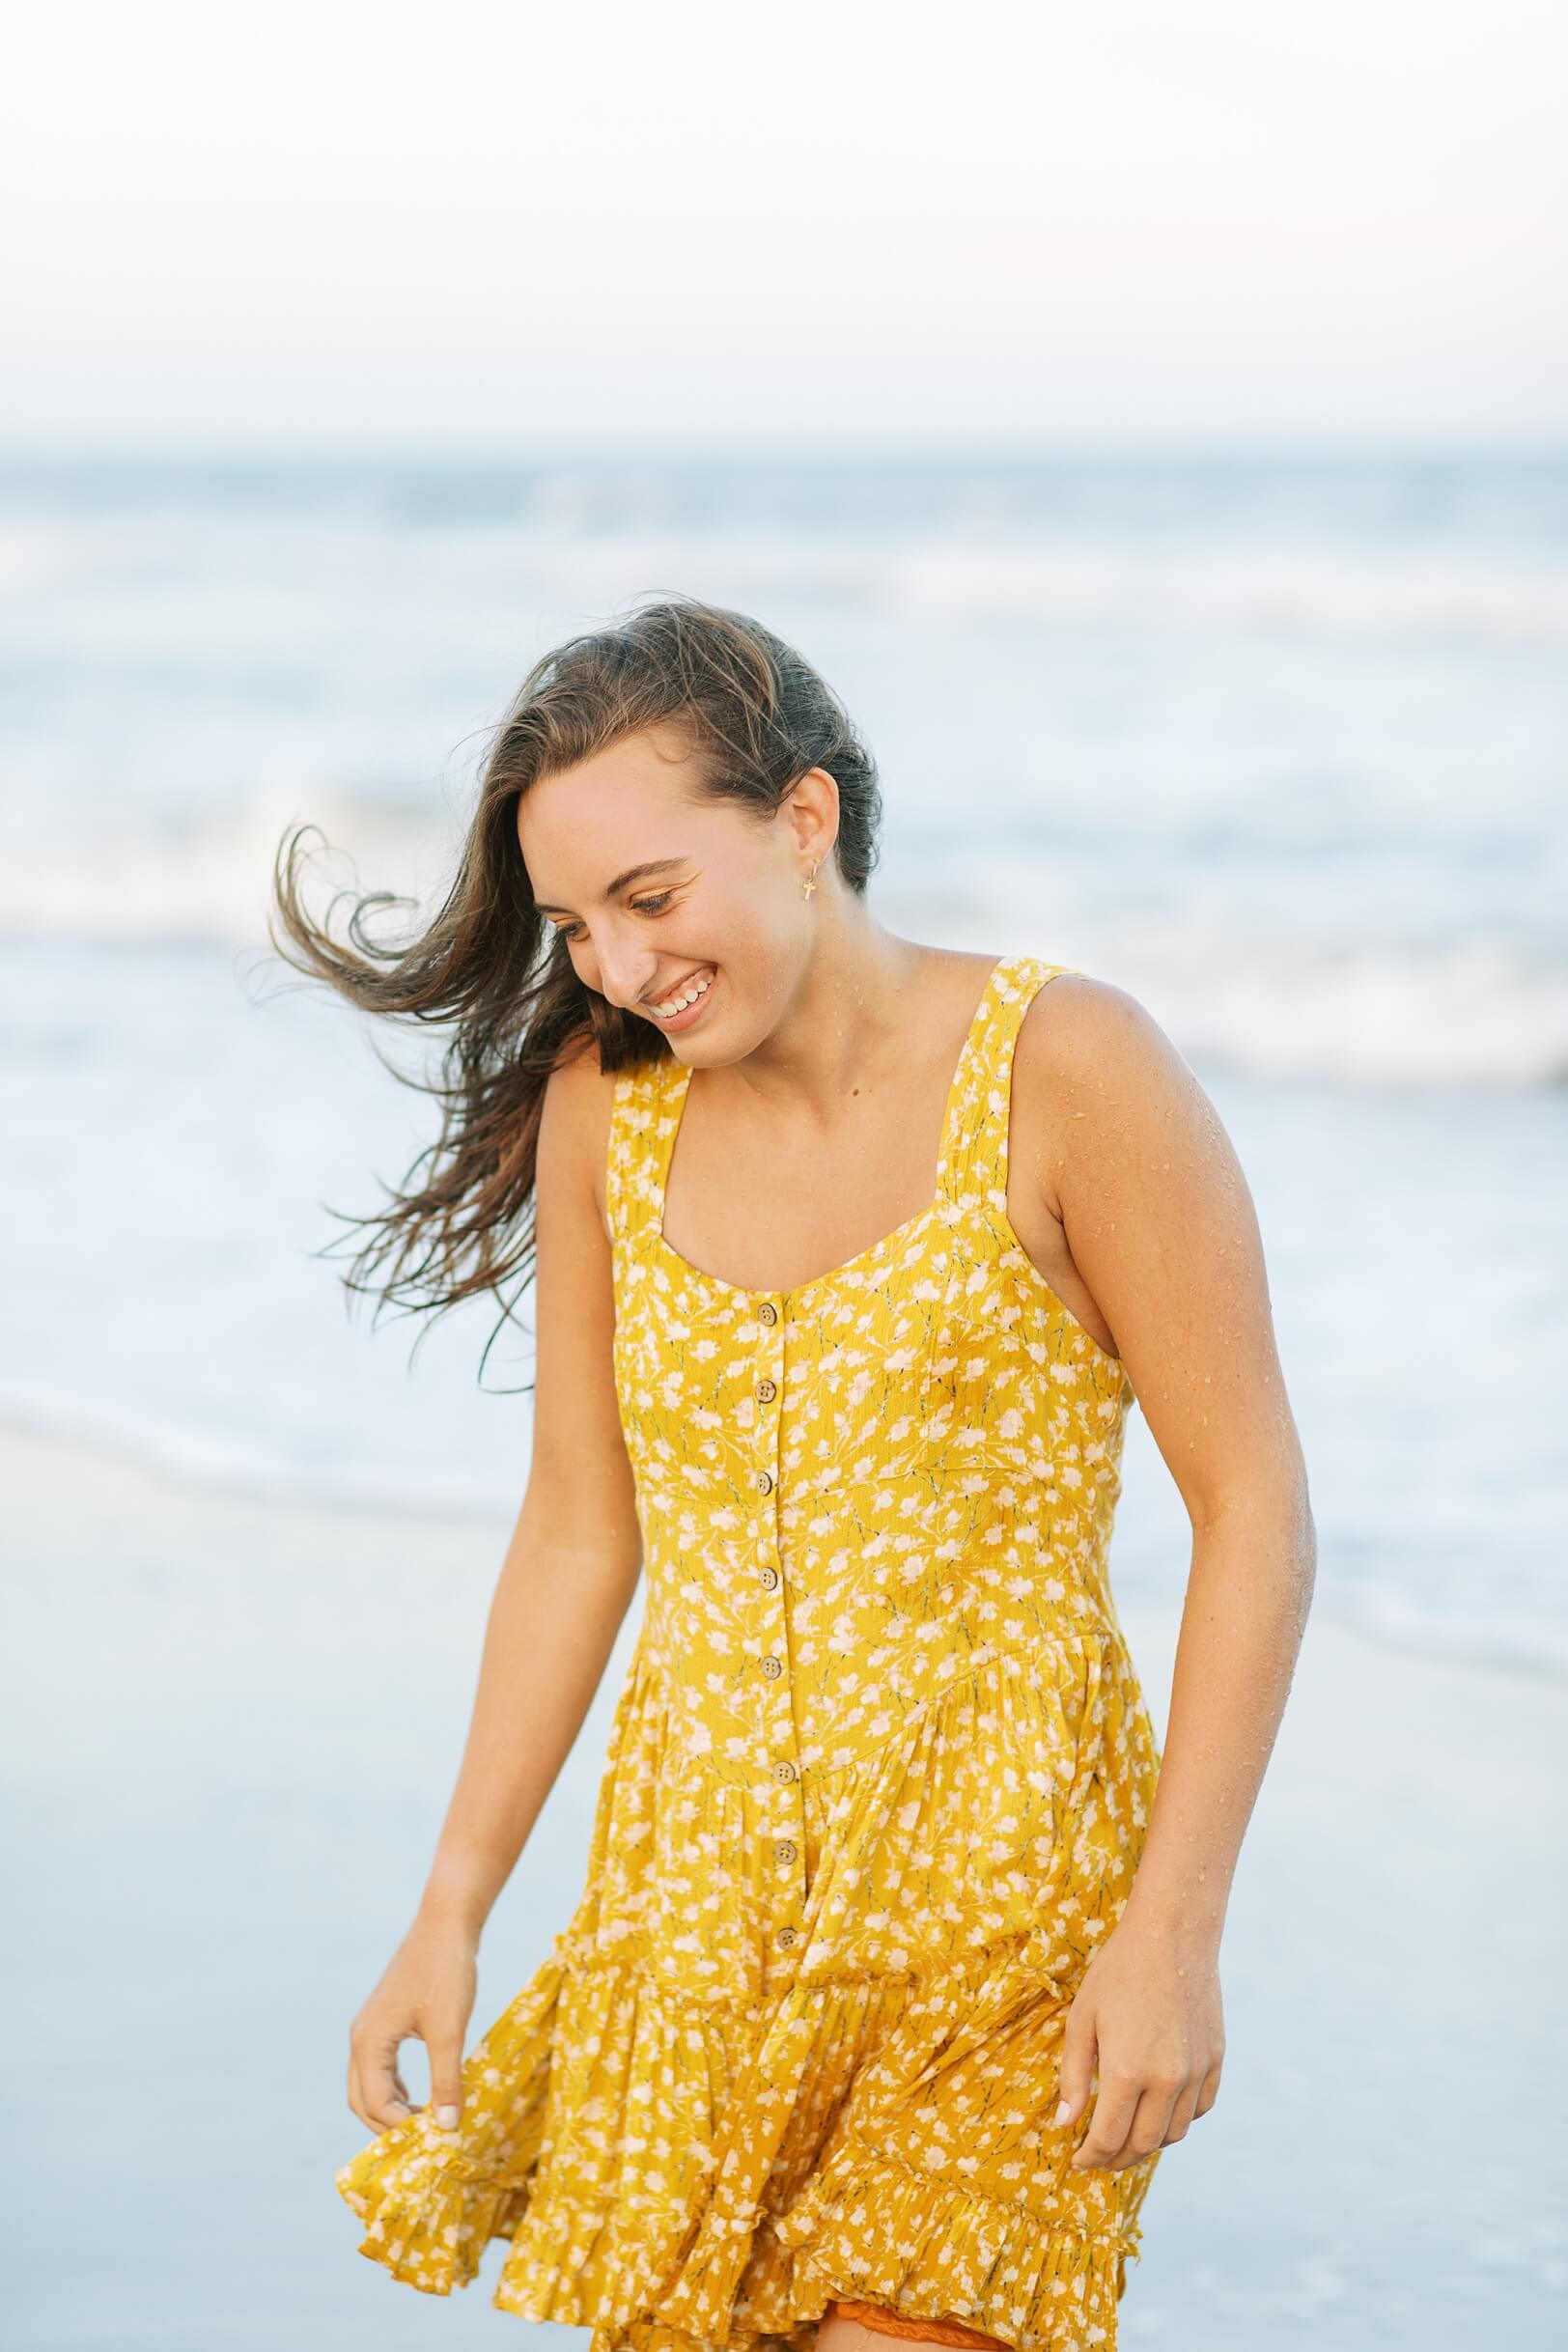 Smiling girl at beach